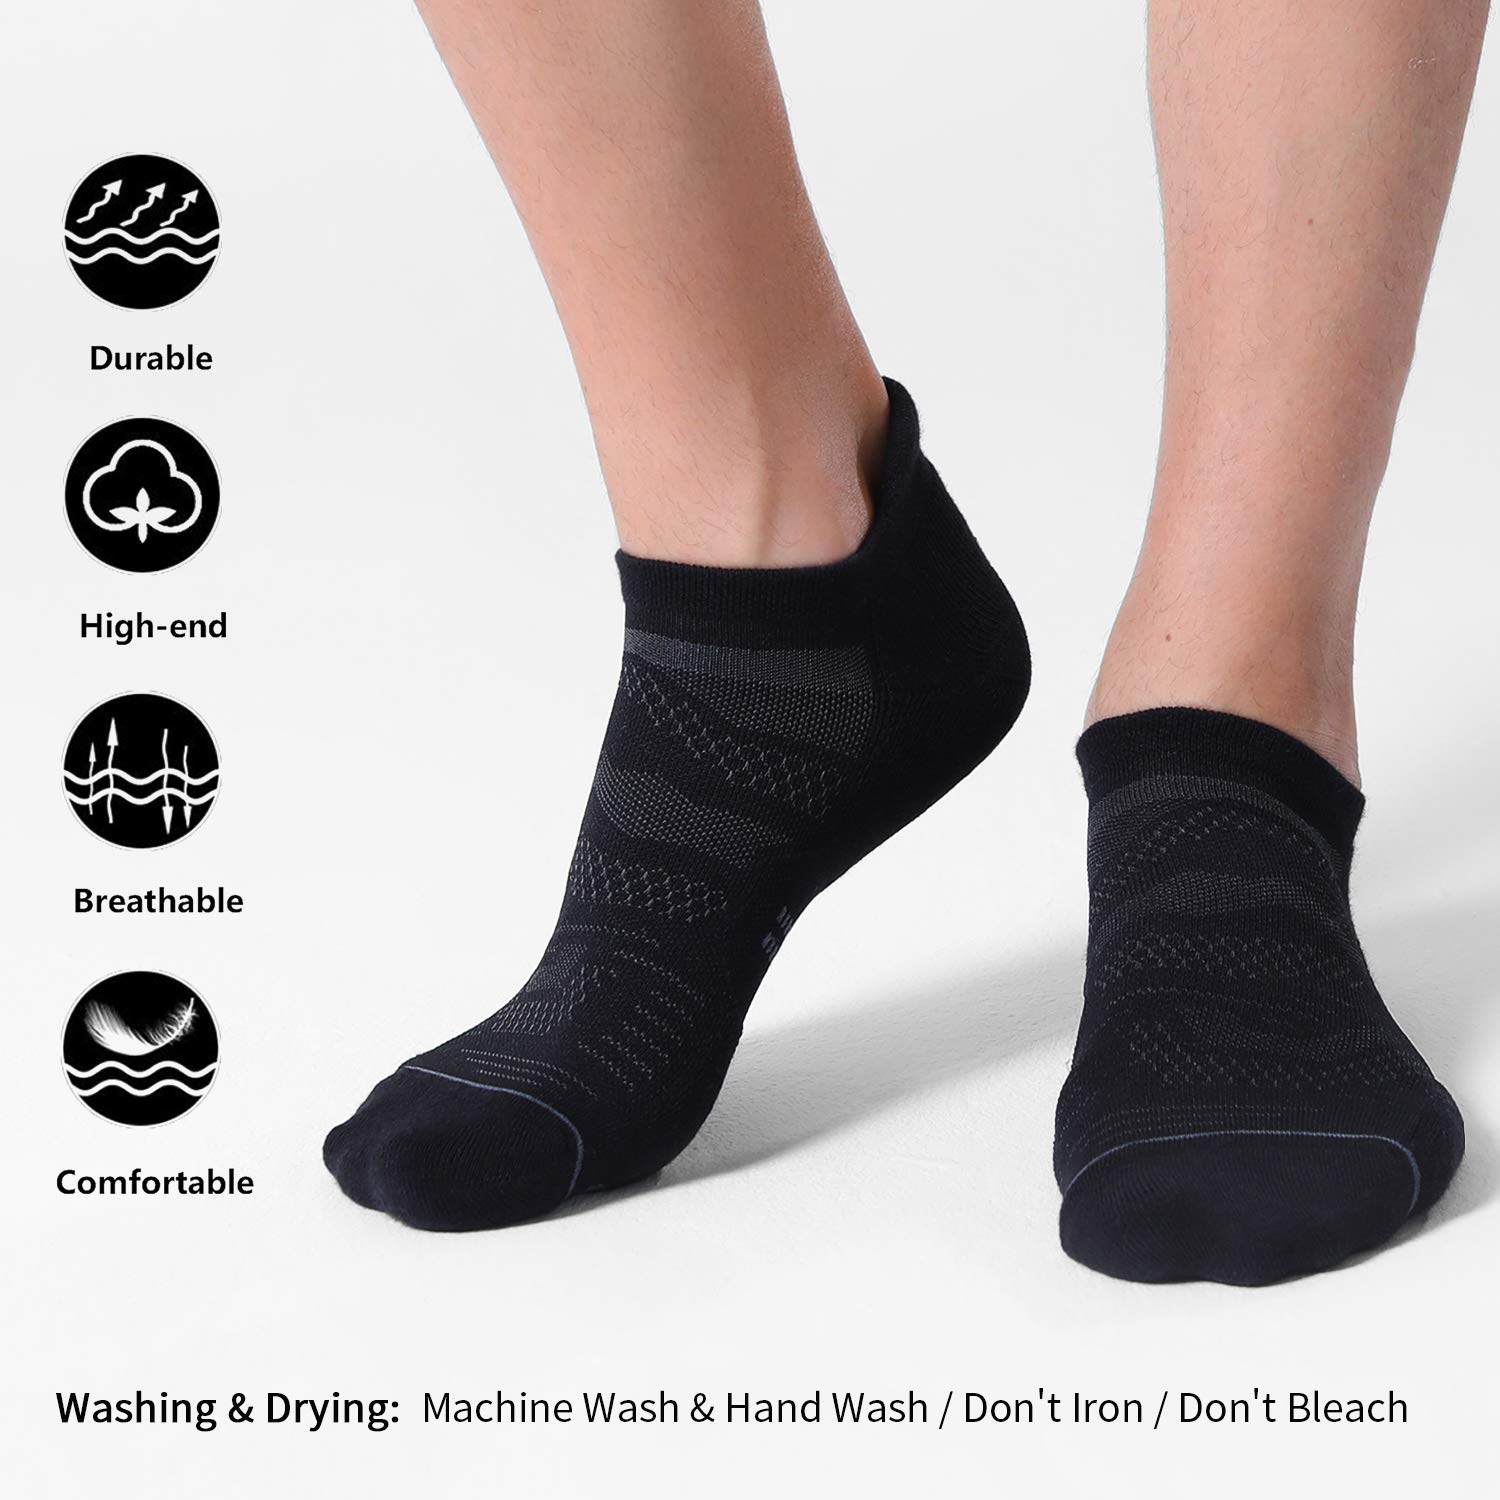 CelerSport 6 Pack Men's Running Ankle Socks with Cushion, Low Cut Athletic Sport Tab Socks Gifts for Men, Black, Shoe Size: 9-12